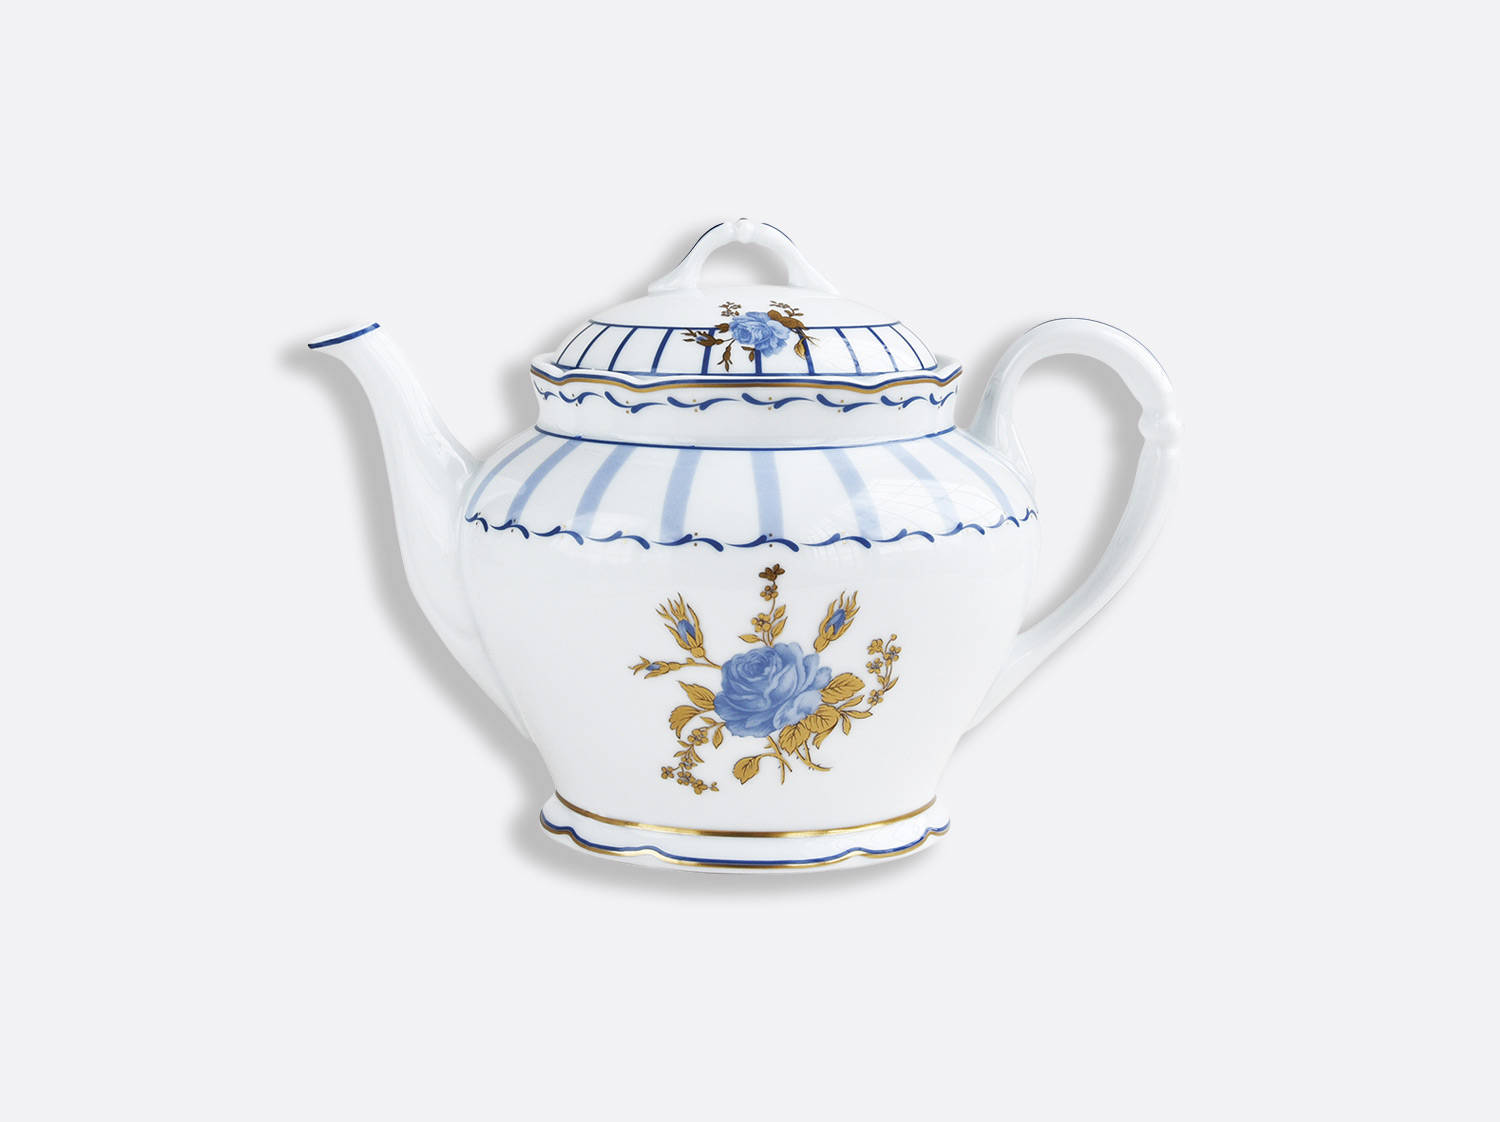 native eb handel Tea pot 40.5 oz BROCANTE | Bernardaud Porcelain